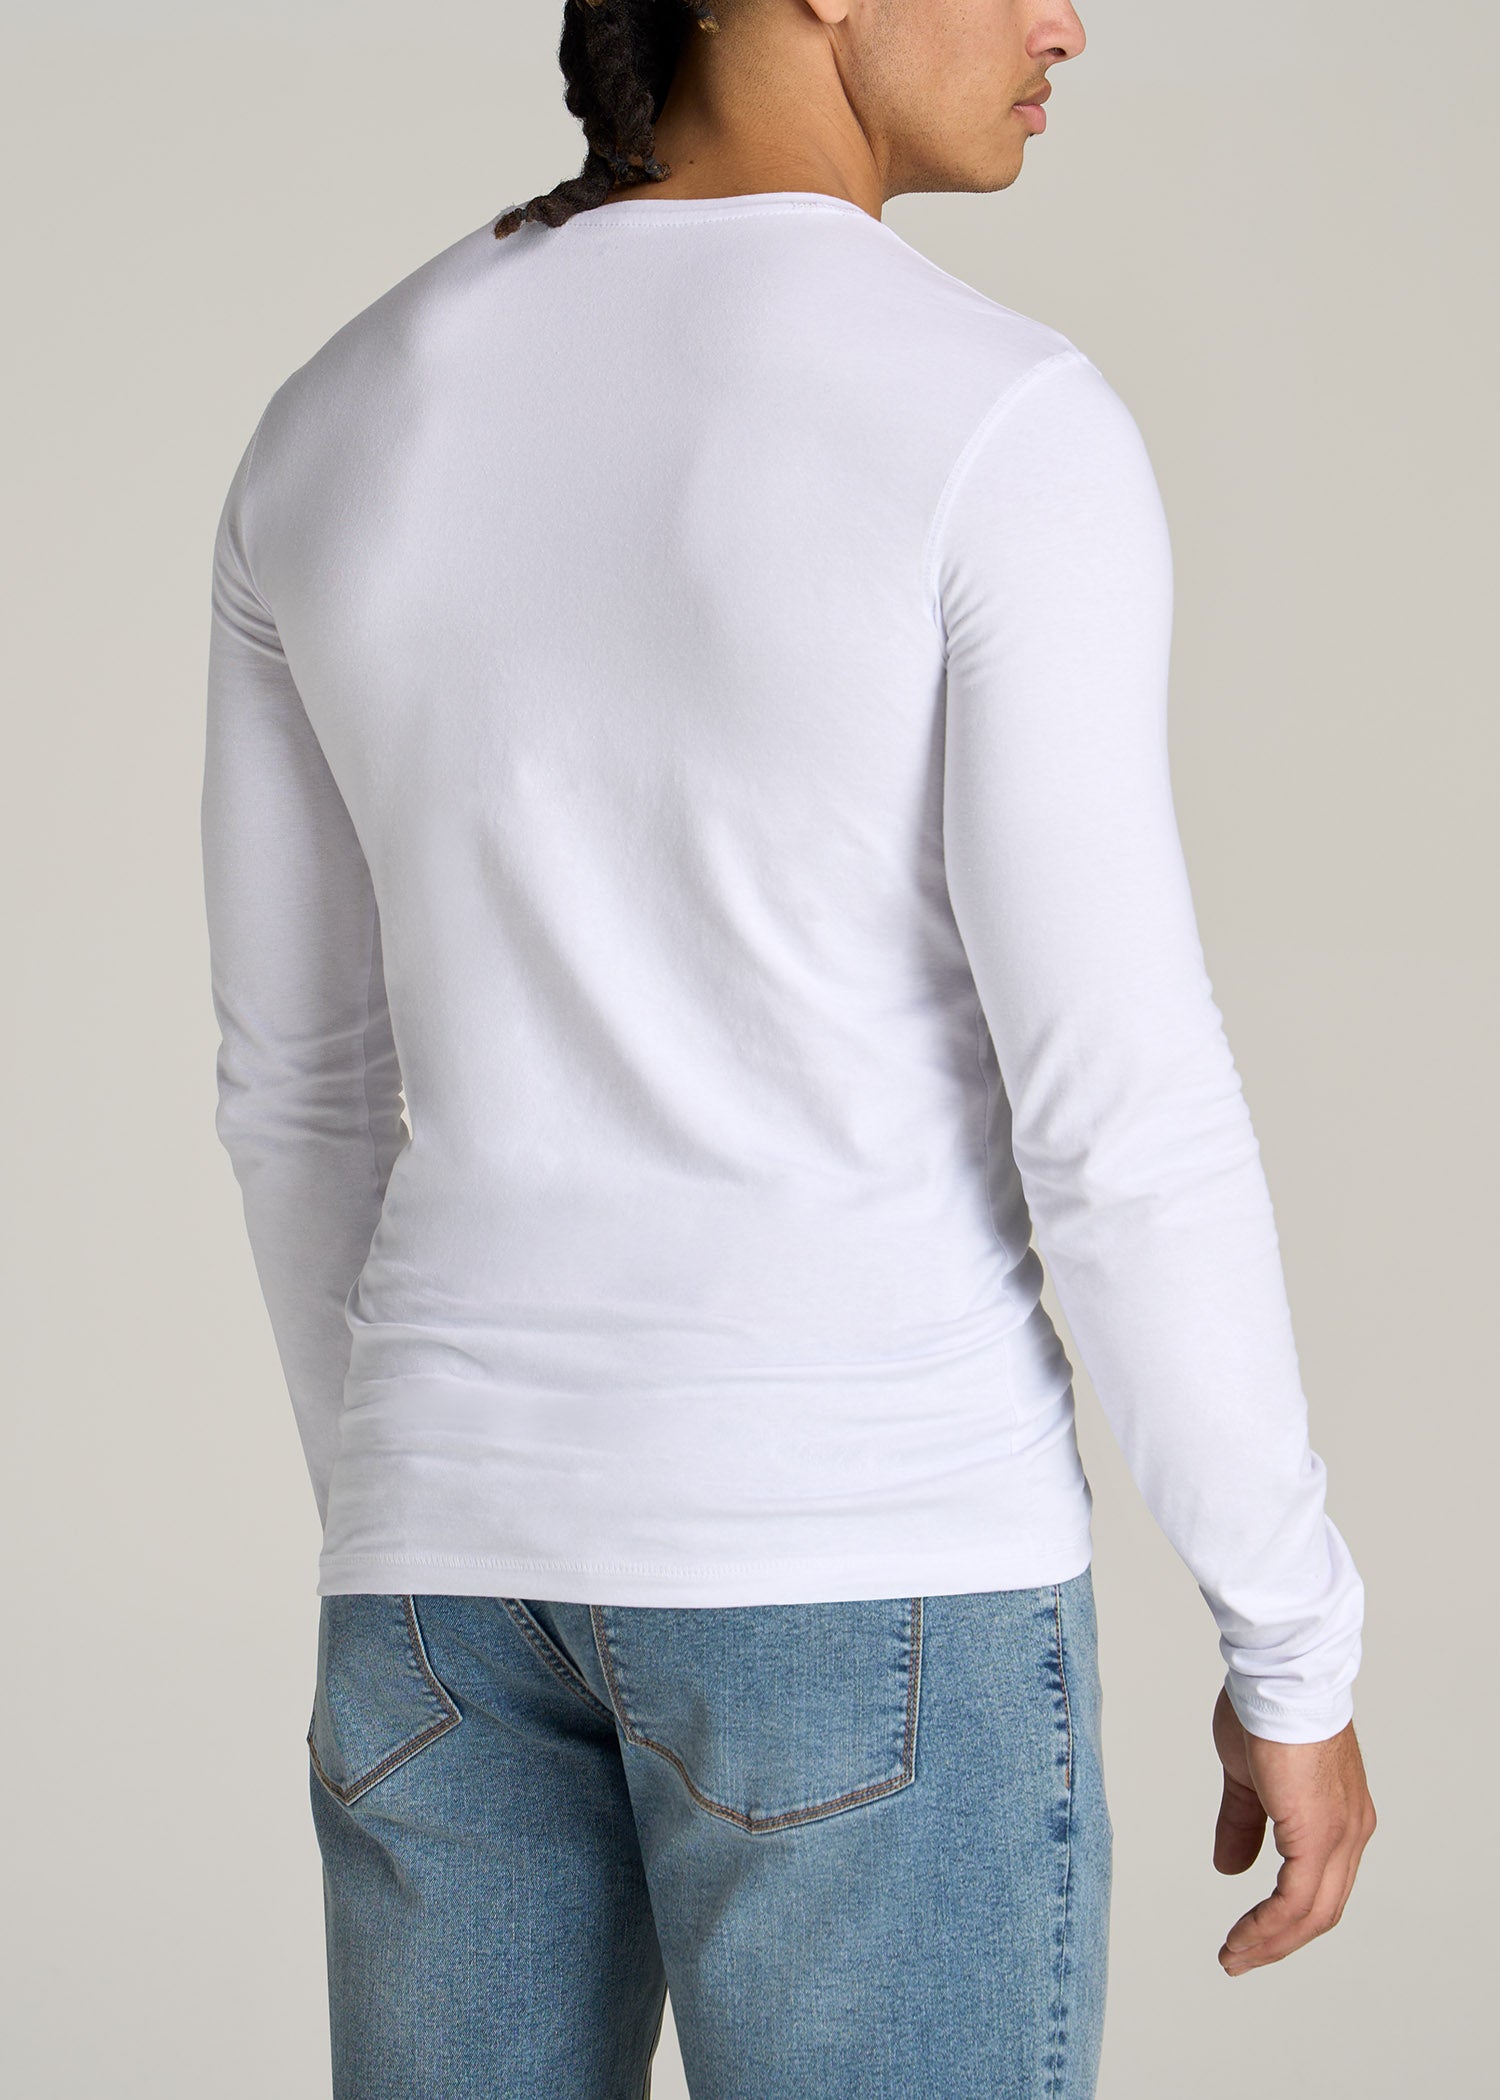 Slim Long Sleeve T Shirt: Tall Men's Slim Fit White Tee – American